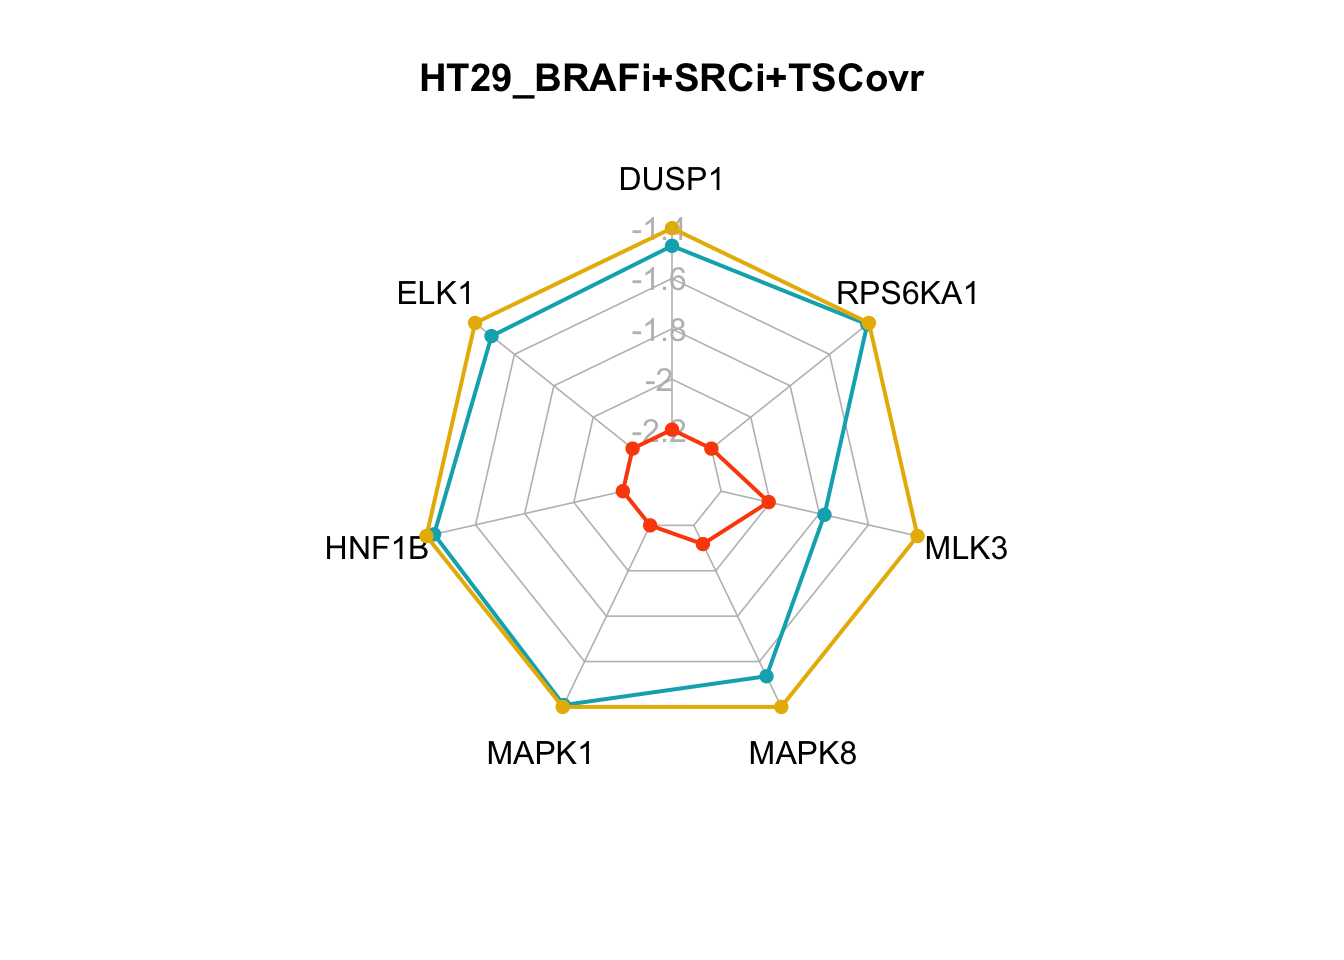 radar charts of the steady-state values of MAPK signaling internal-marker nodes for HT29_BRAFi+SRCi_TSCovr and HT29_BRAFi+SRCi_GRB2i